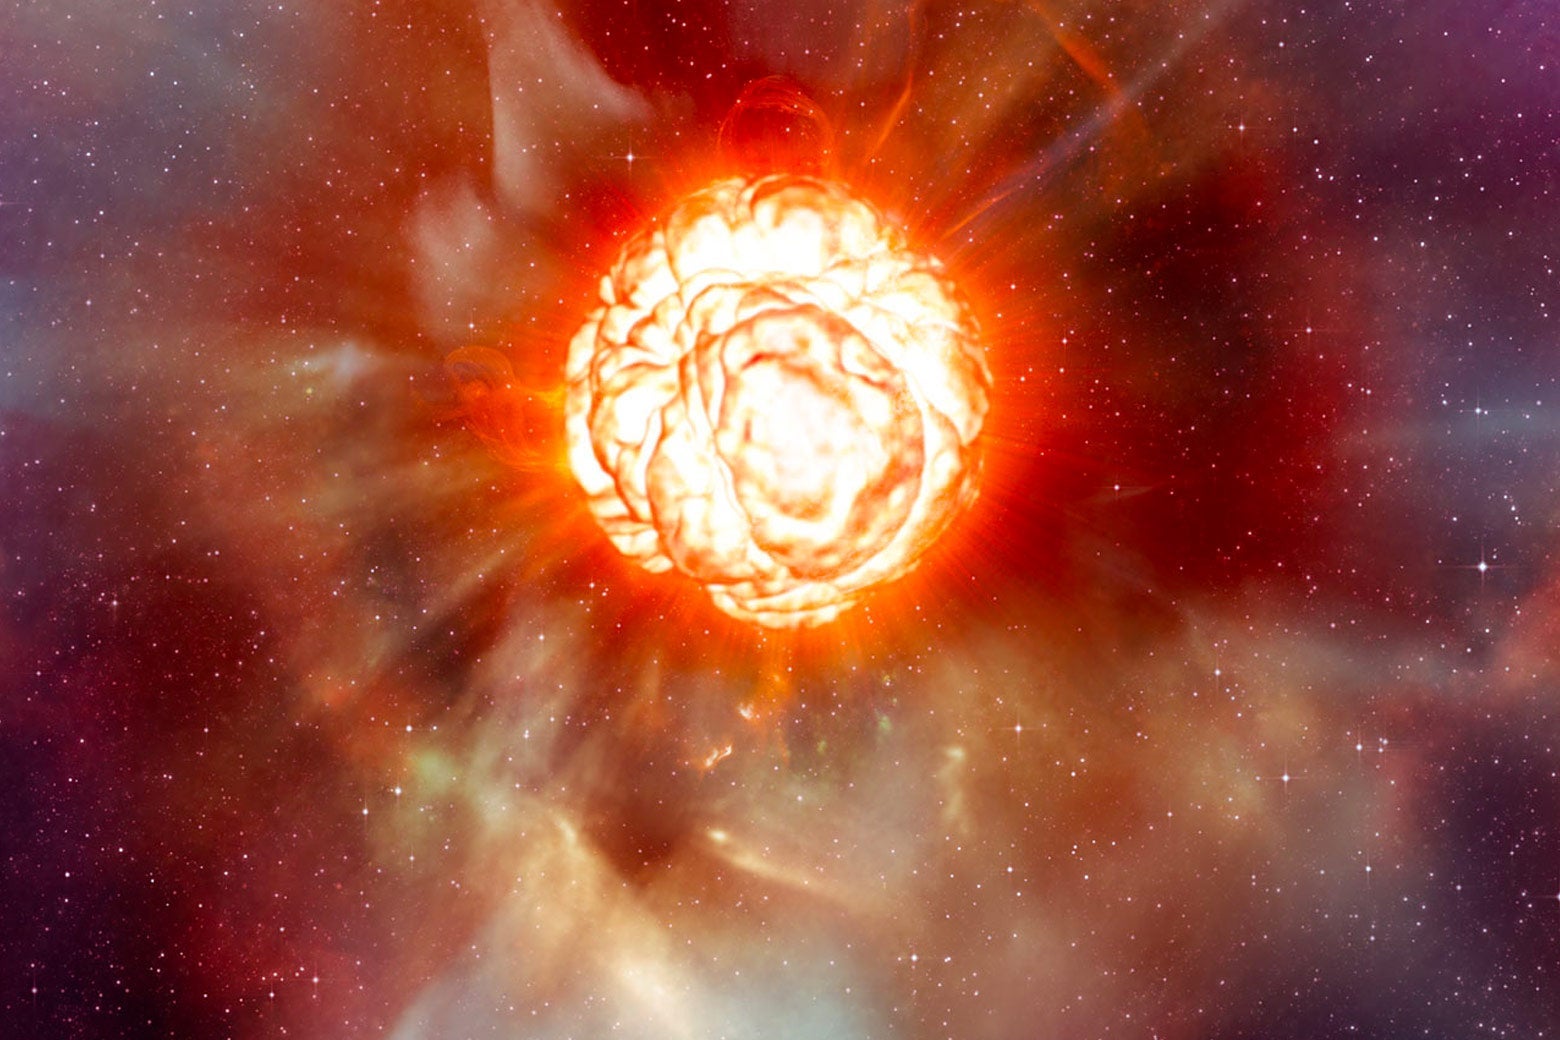 I will be very sad if Betelgeuse goes supernova.